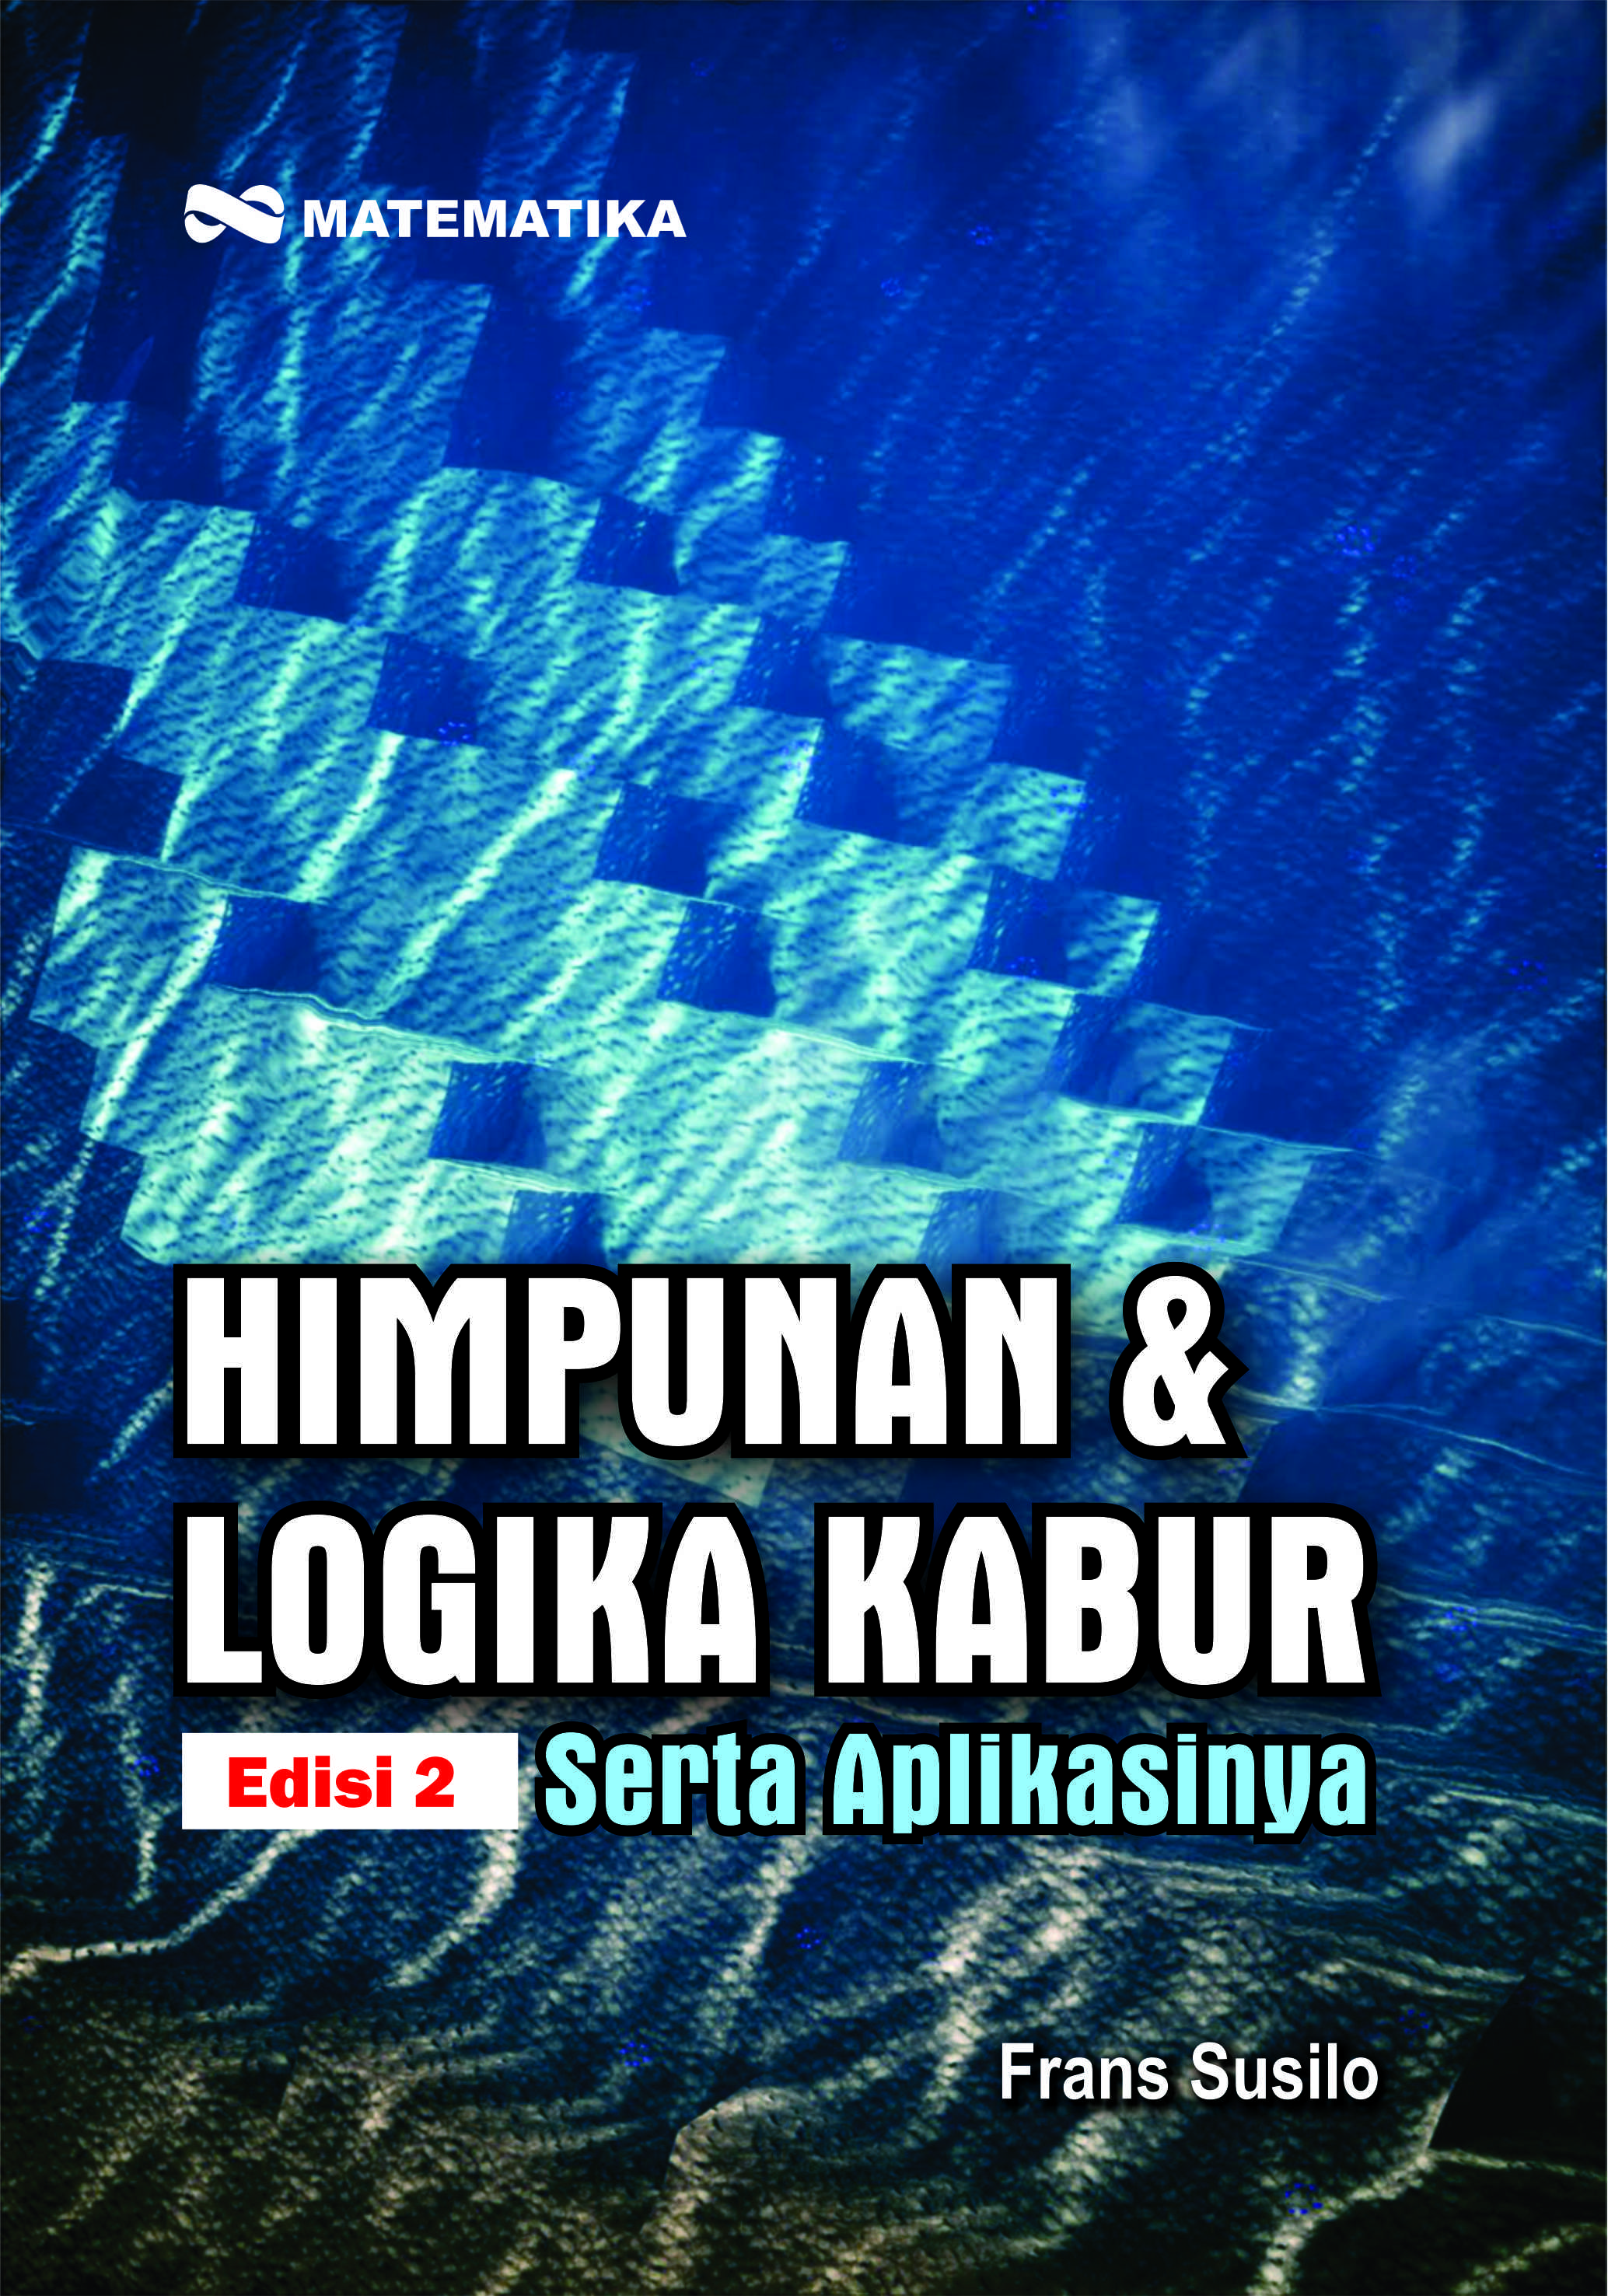 Himpunan & logika kabur serta aplikasinya : edisi 2